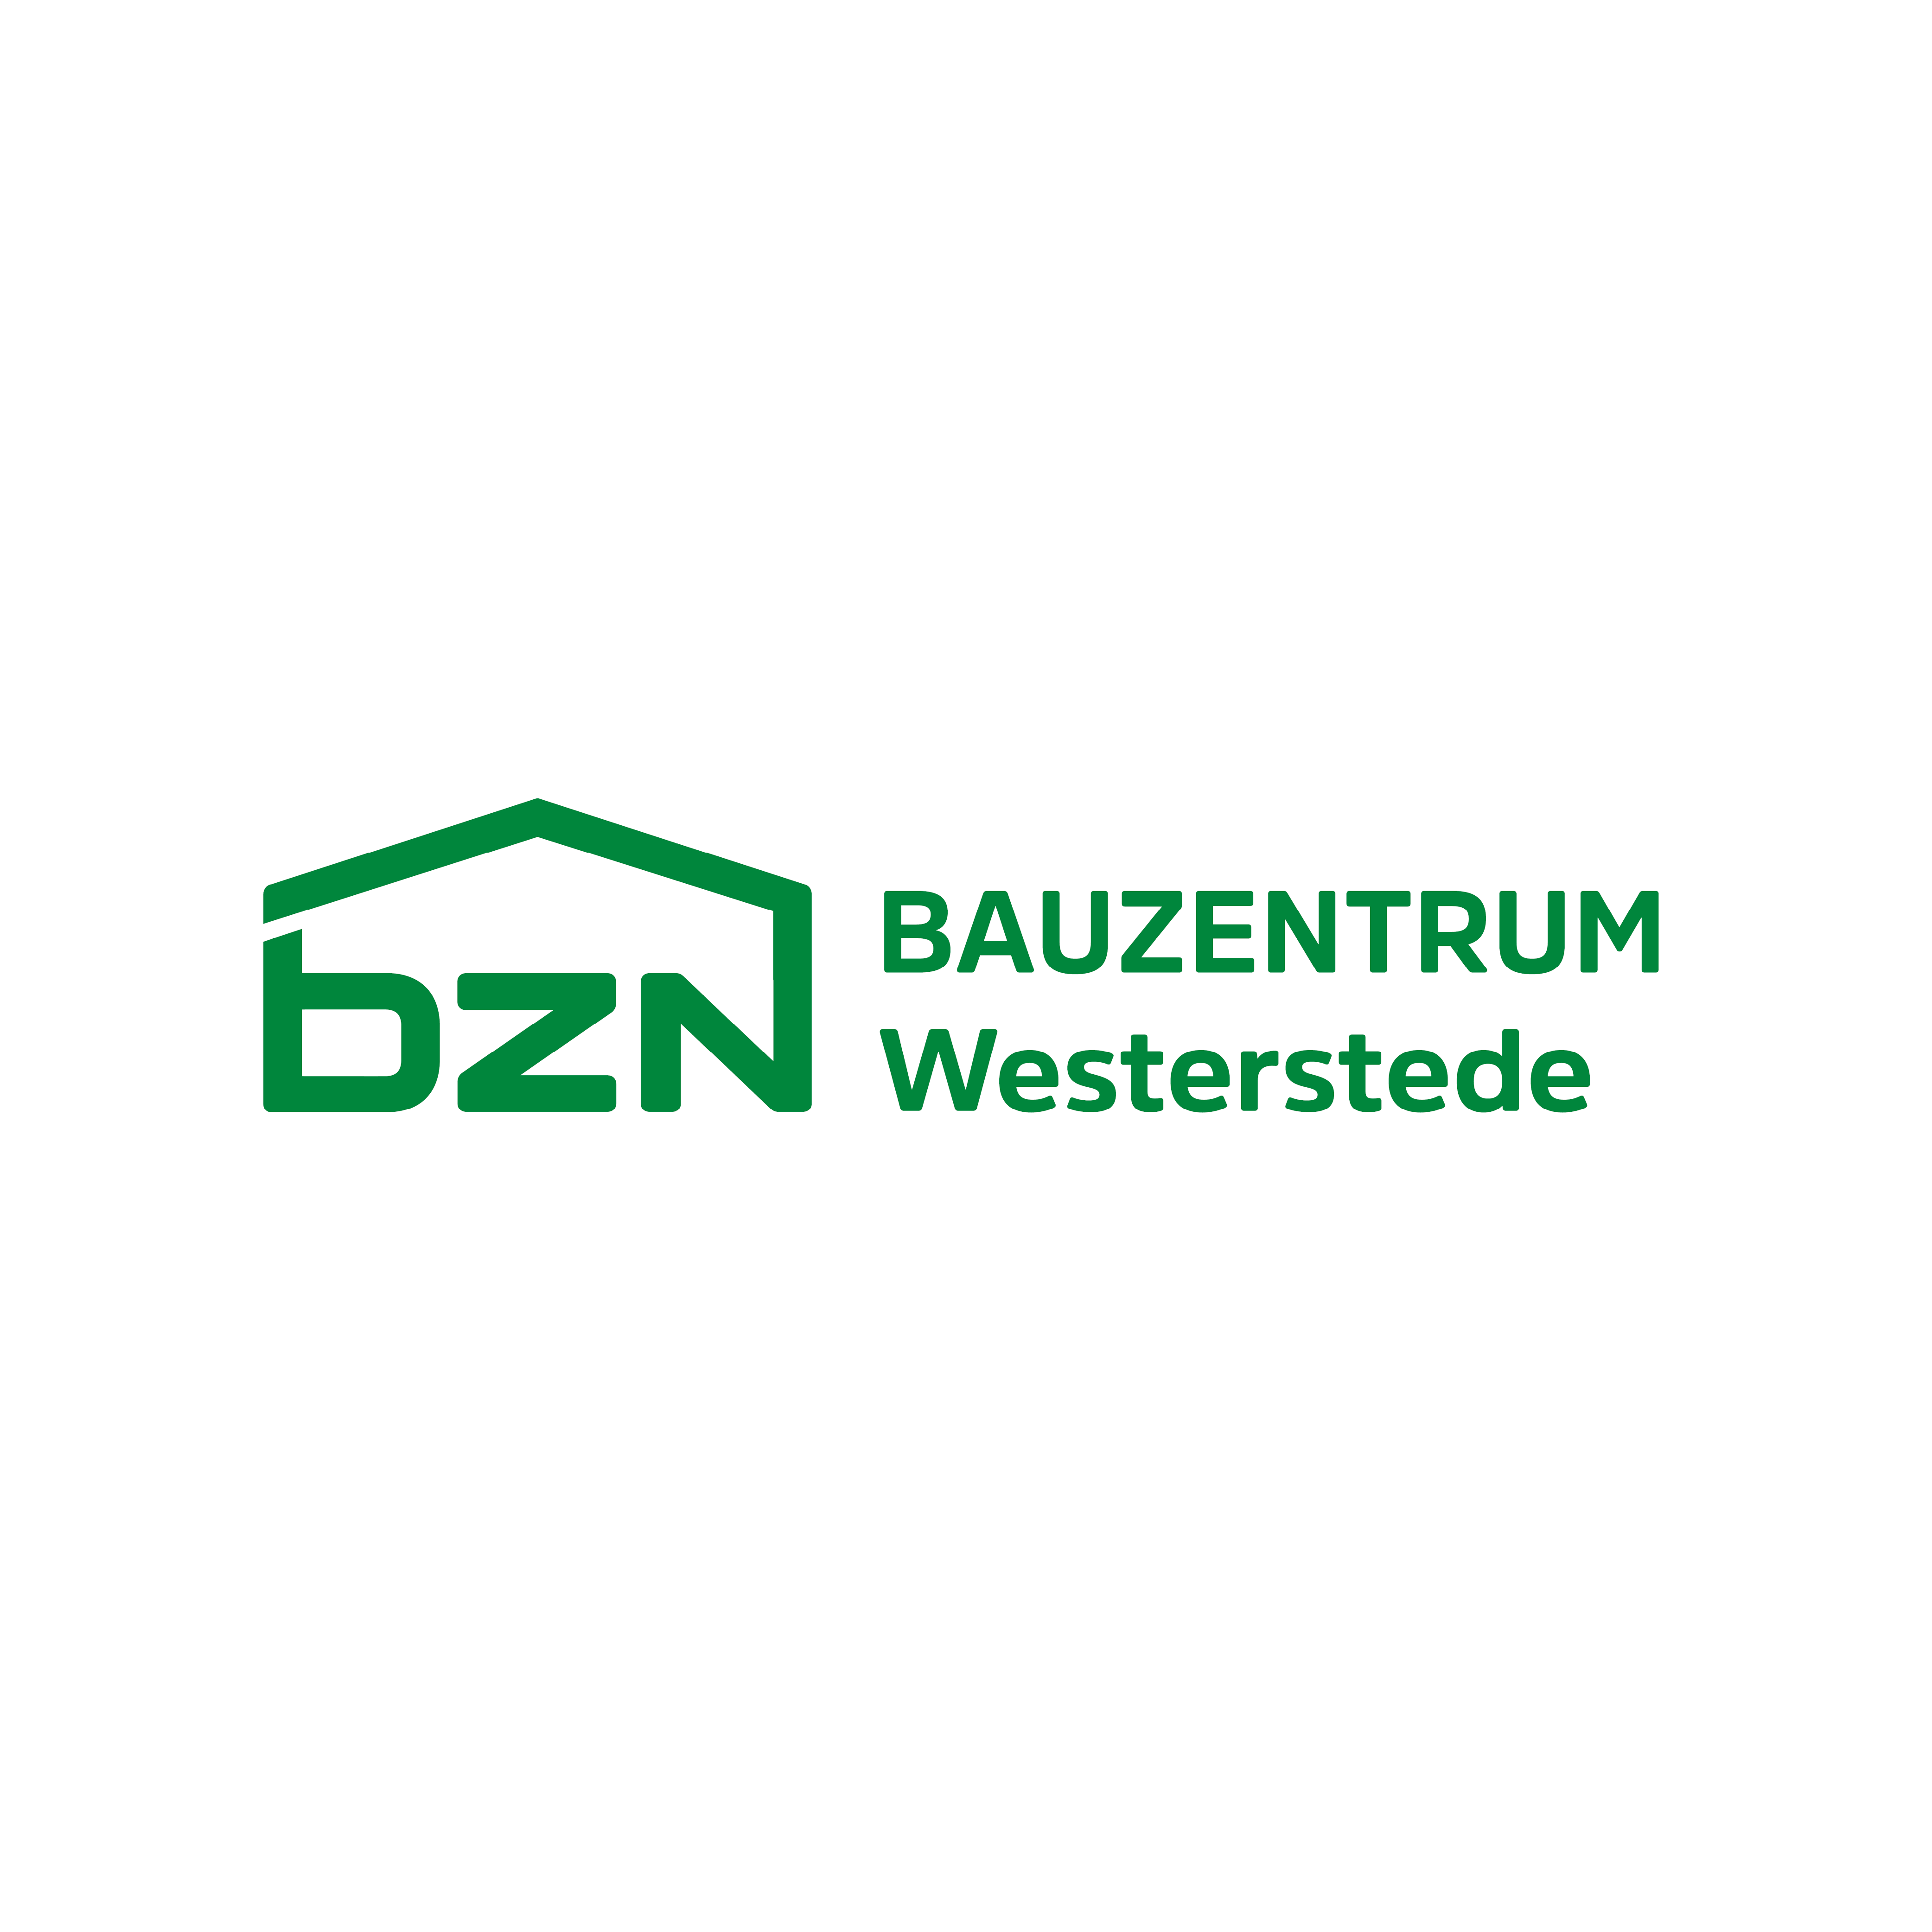 BZN Bauzentrum Westerstede GmbH & Co. KG in Westerstede - Logo